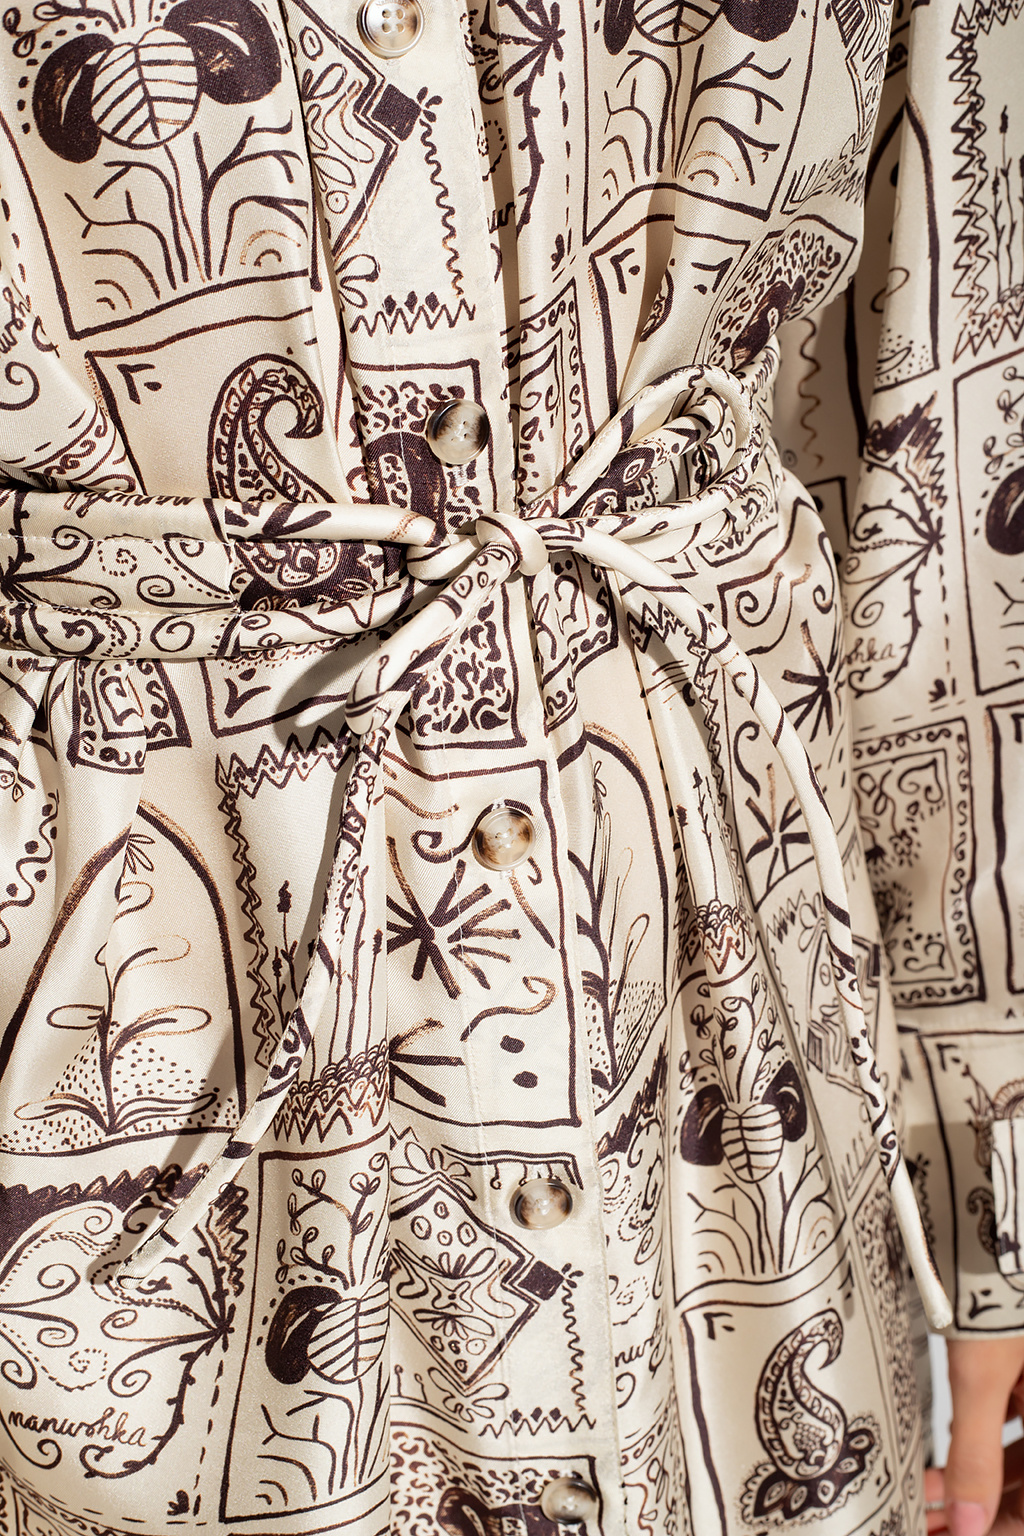 Nanushka ‘Eluna’ patterned dress